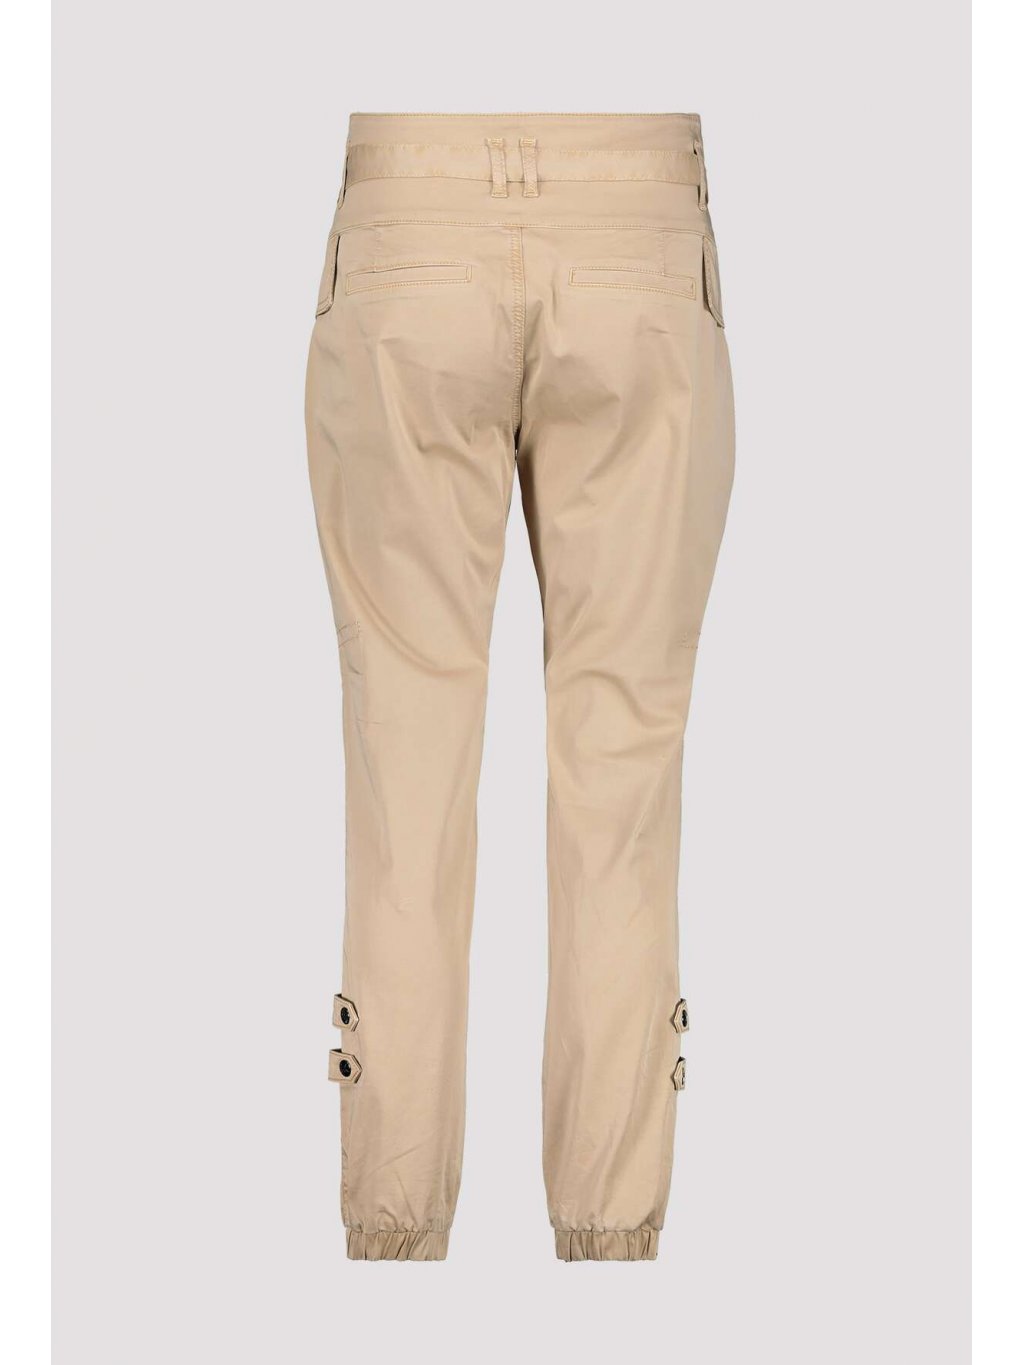 Kalhoty Monari 5757 béžové luxus